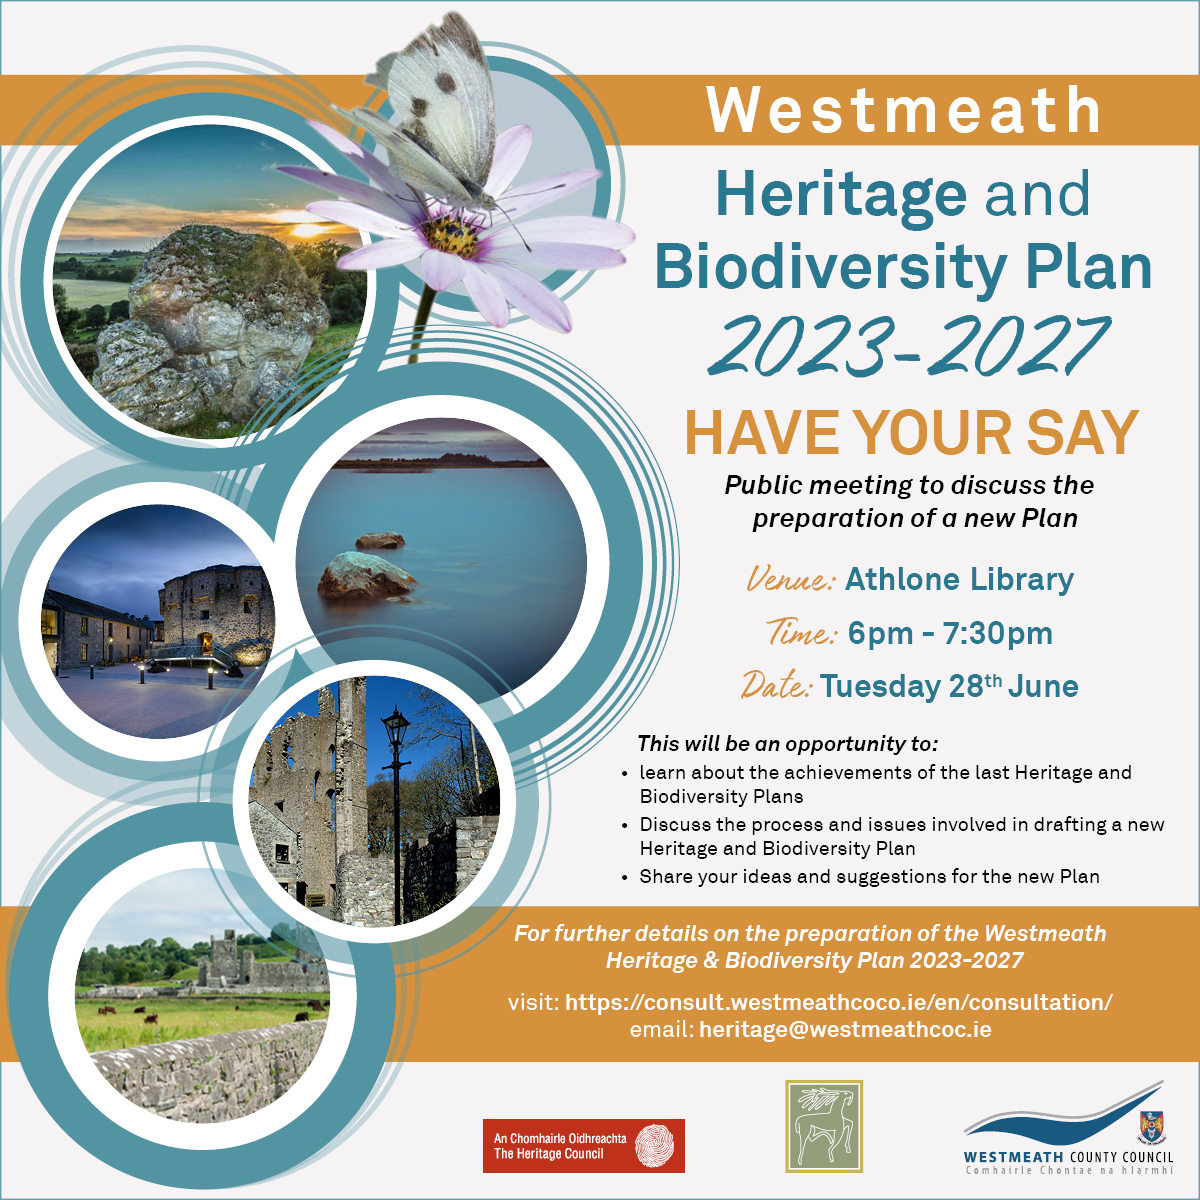 Meeting tonight regarding Westmeath Heritage & Biodiversity Plan in Athlone Library. See poster for details. @westmeathcoco #westmeath #biodiversity #heritage #haveyoursay